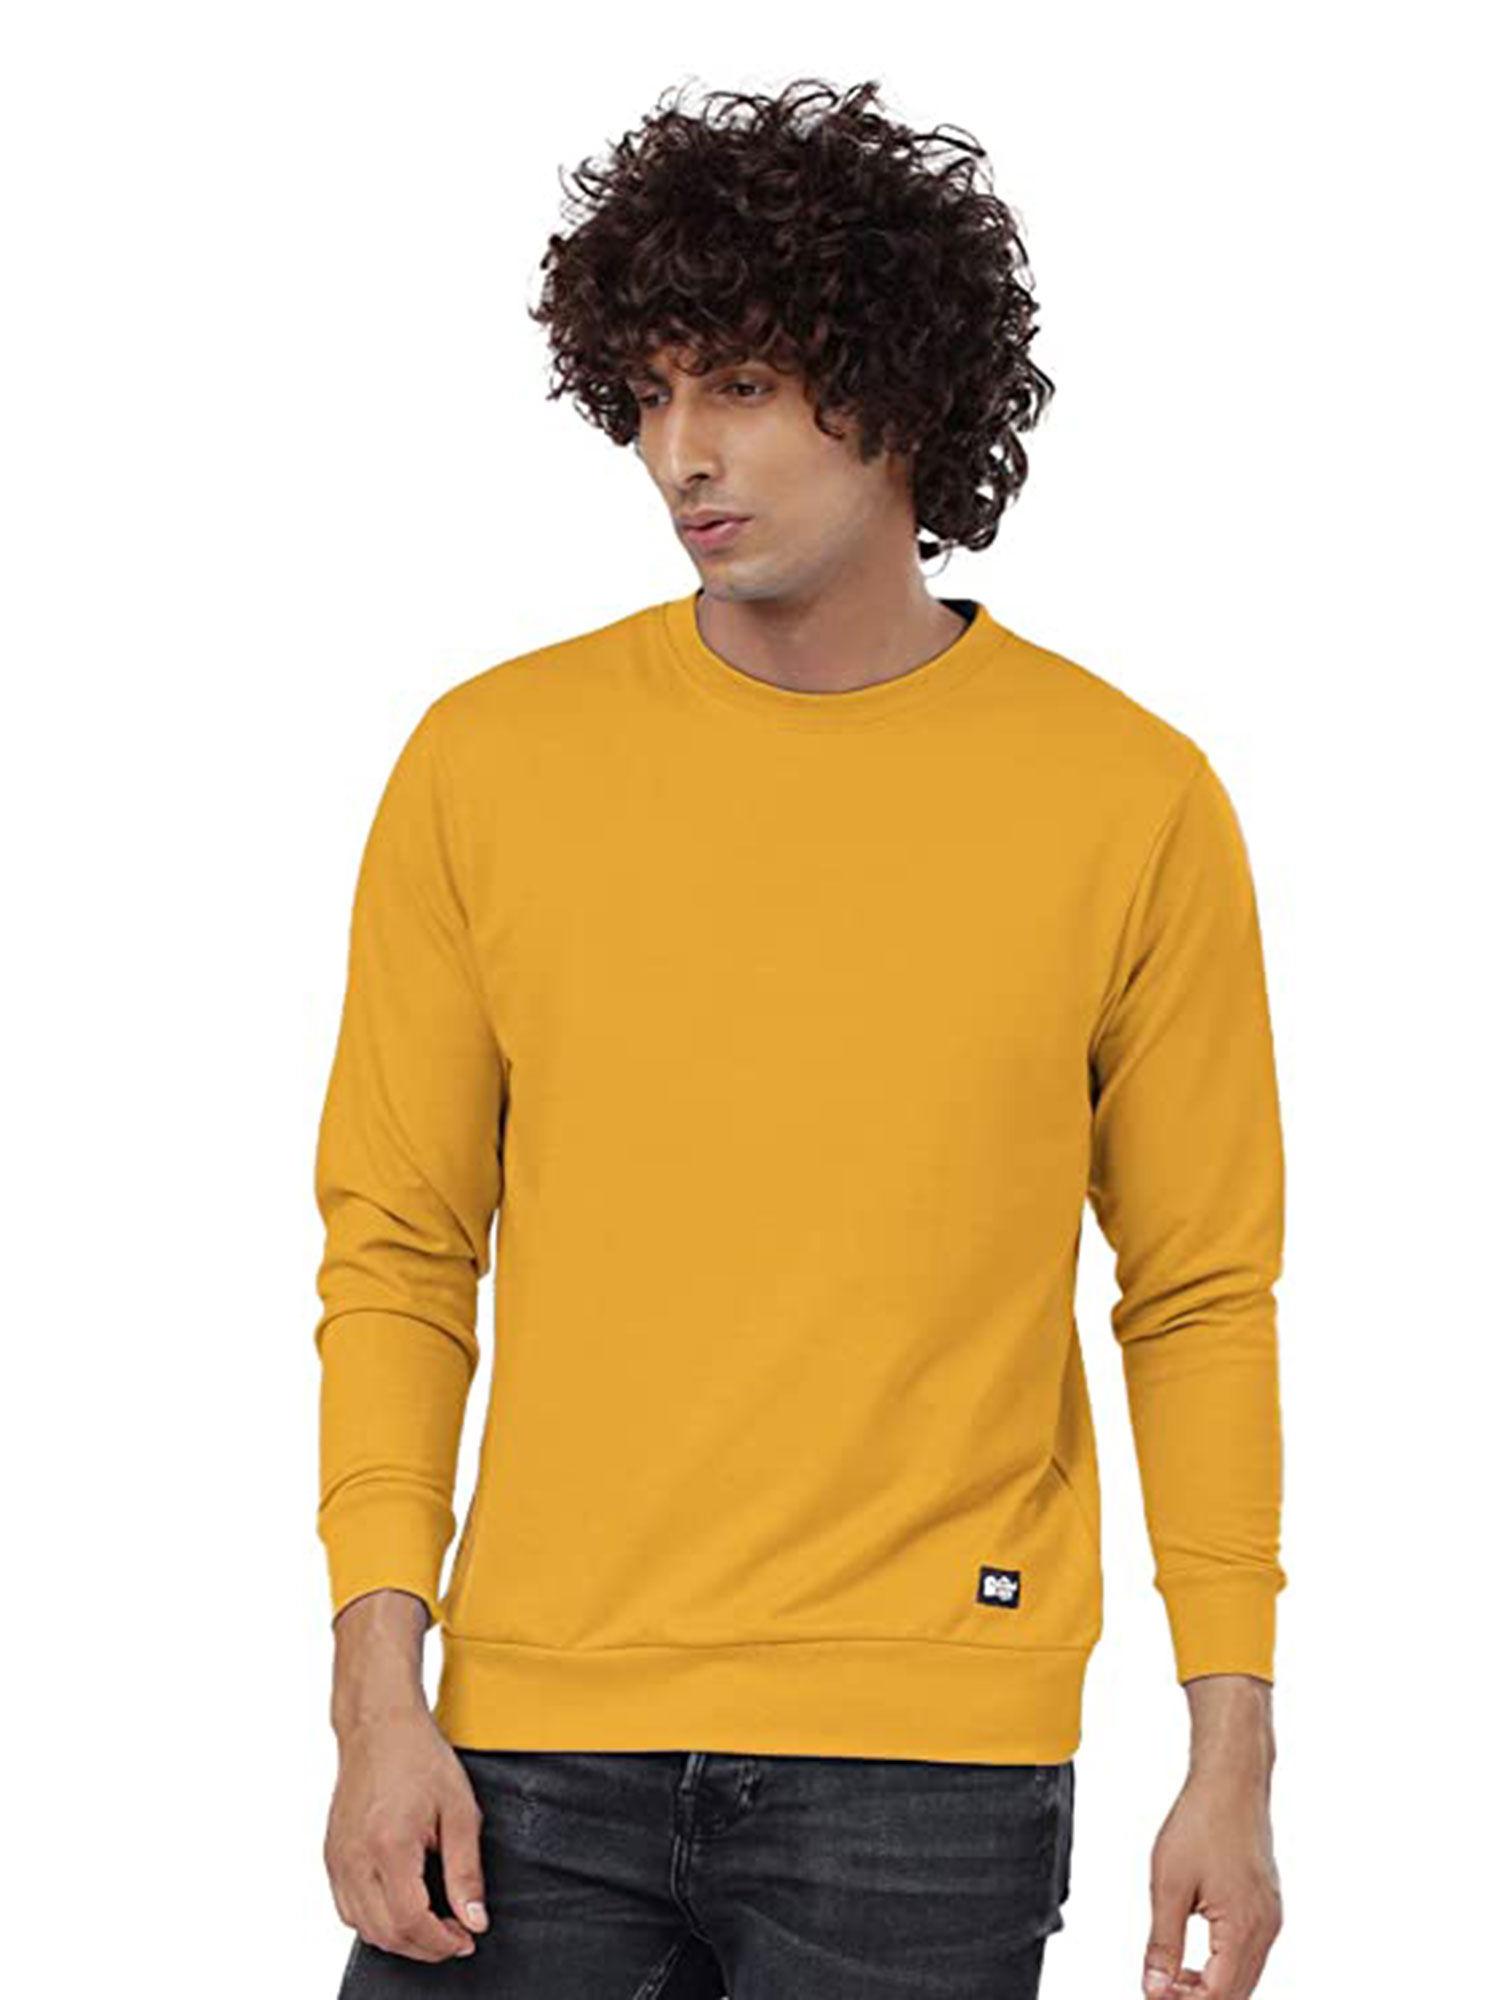 solids mustard yellow sweatshirts for mens